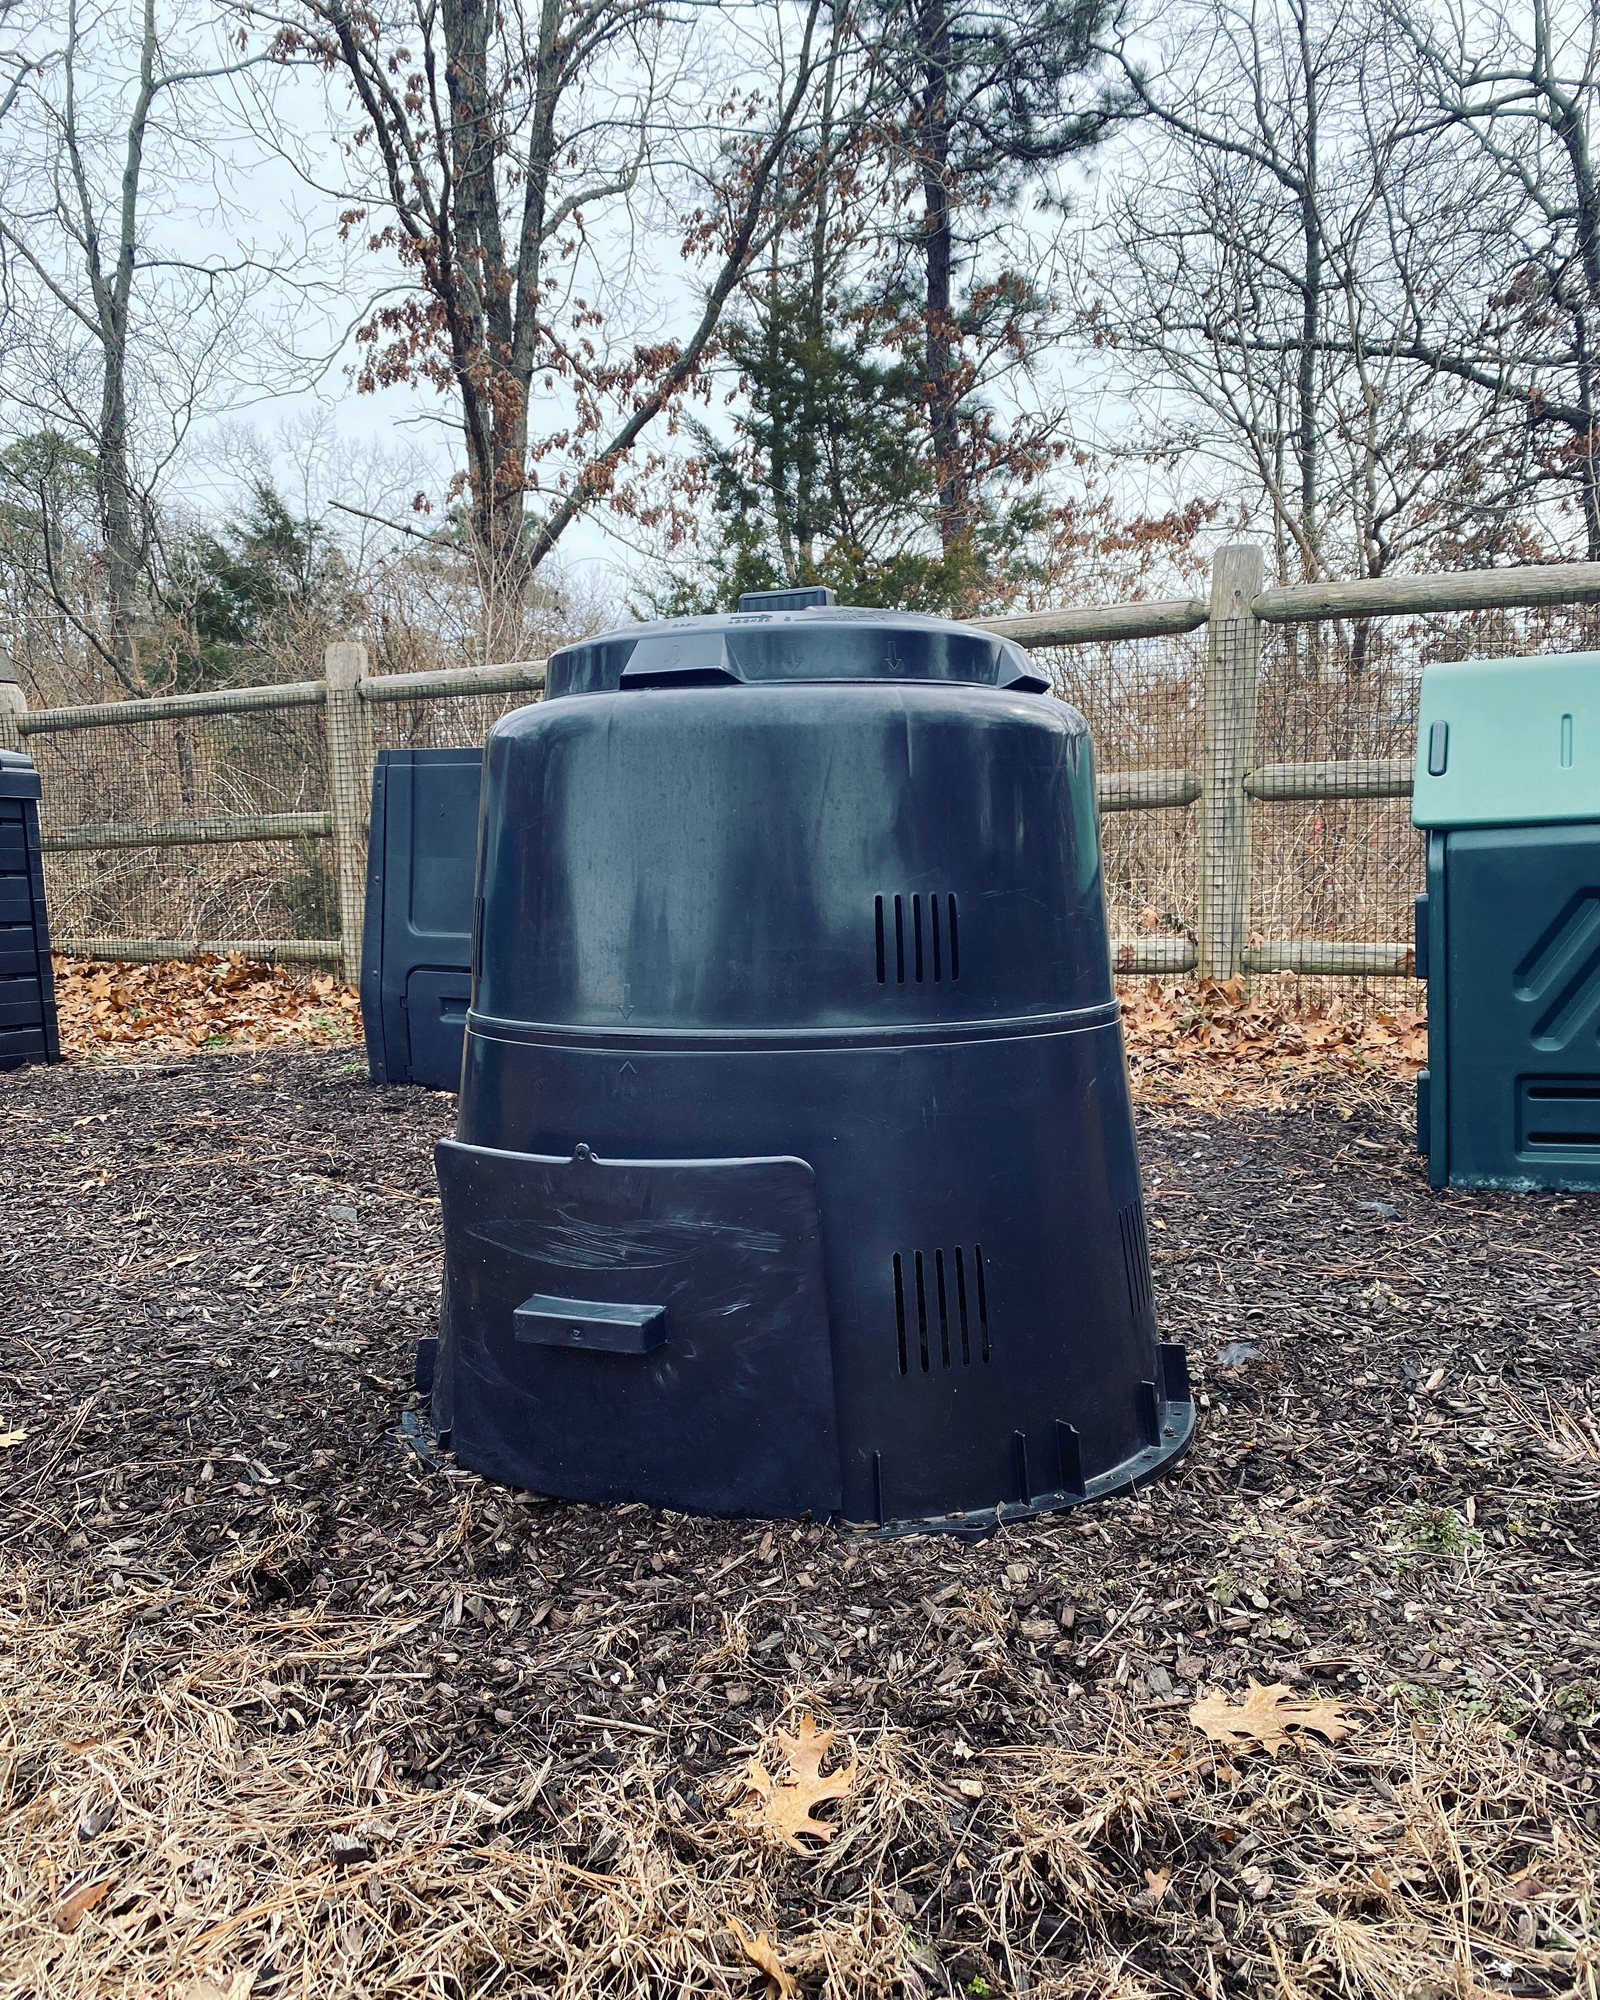 ACUA Hosting a Compost Bin & Rain Barrel Sale